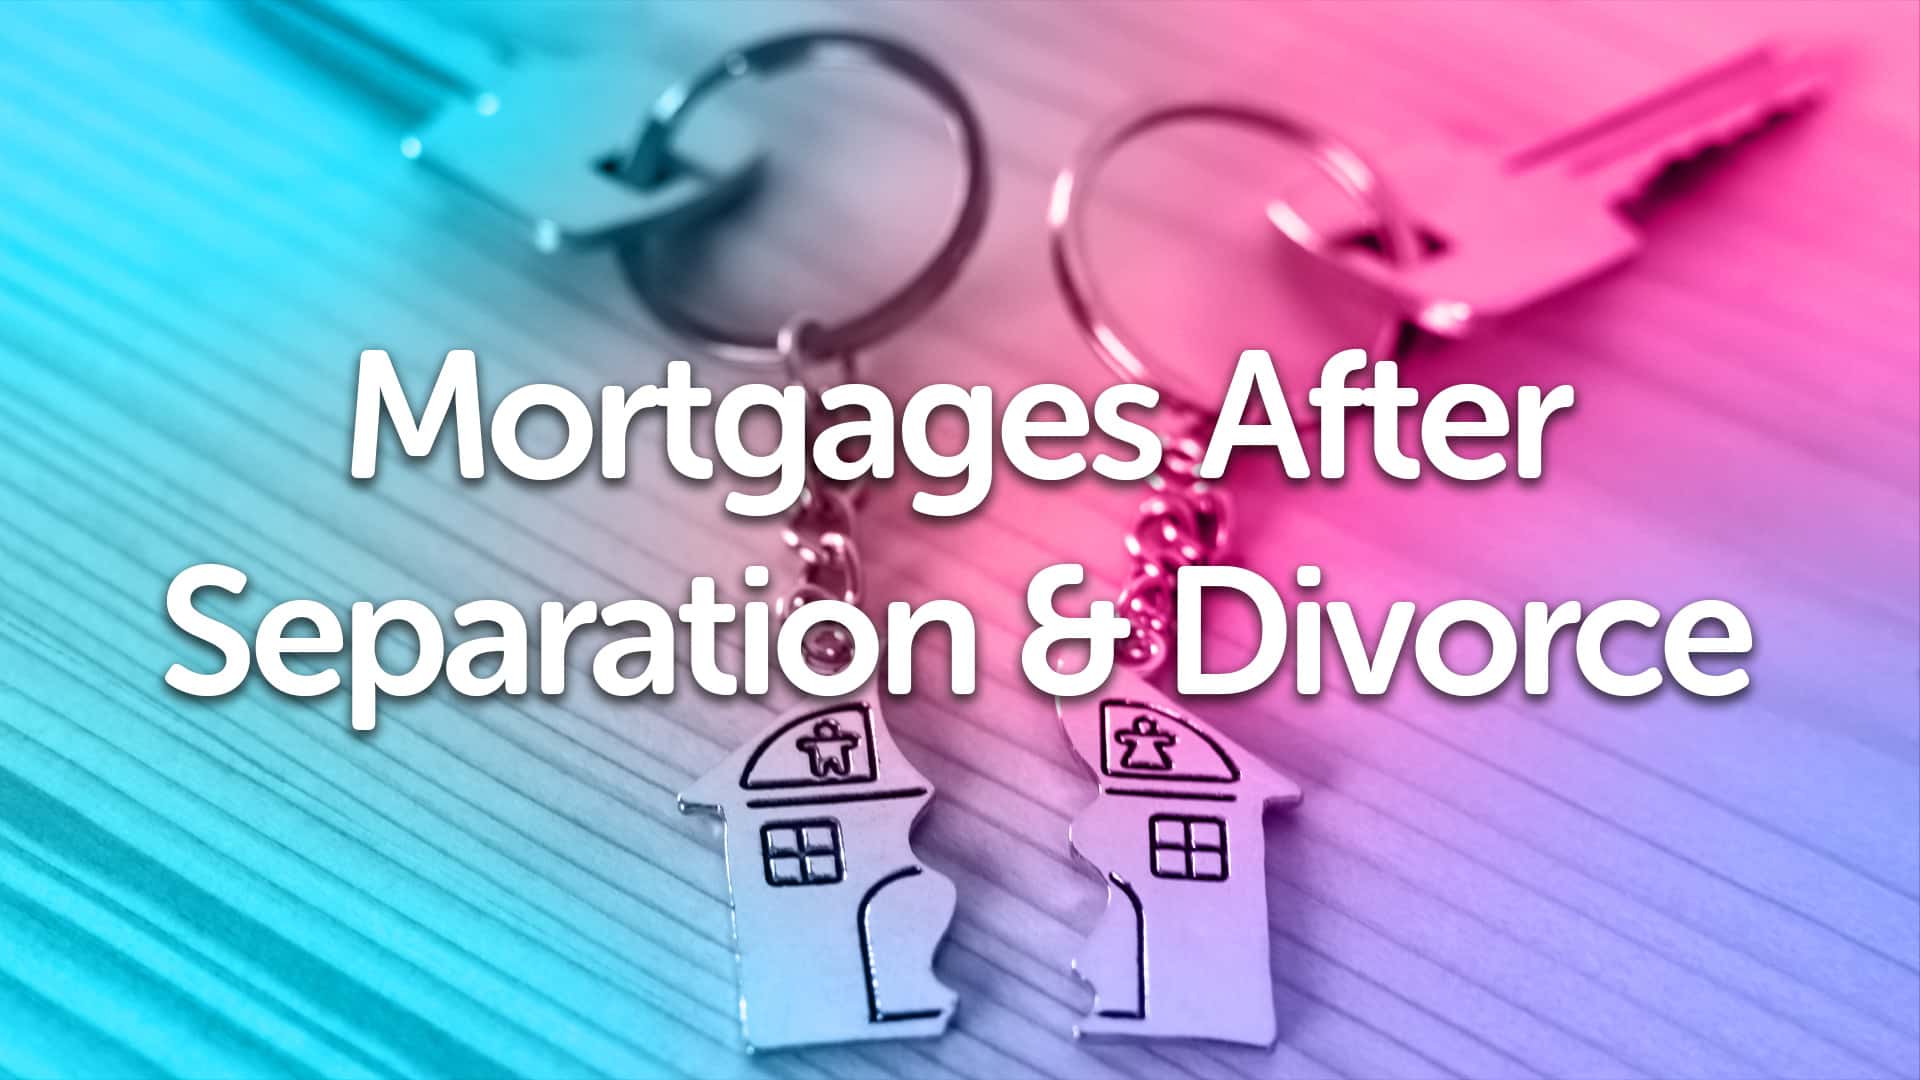 Divorce & Separation Mortgage Advice in York